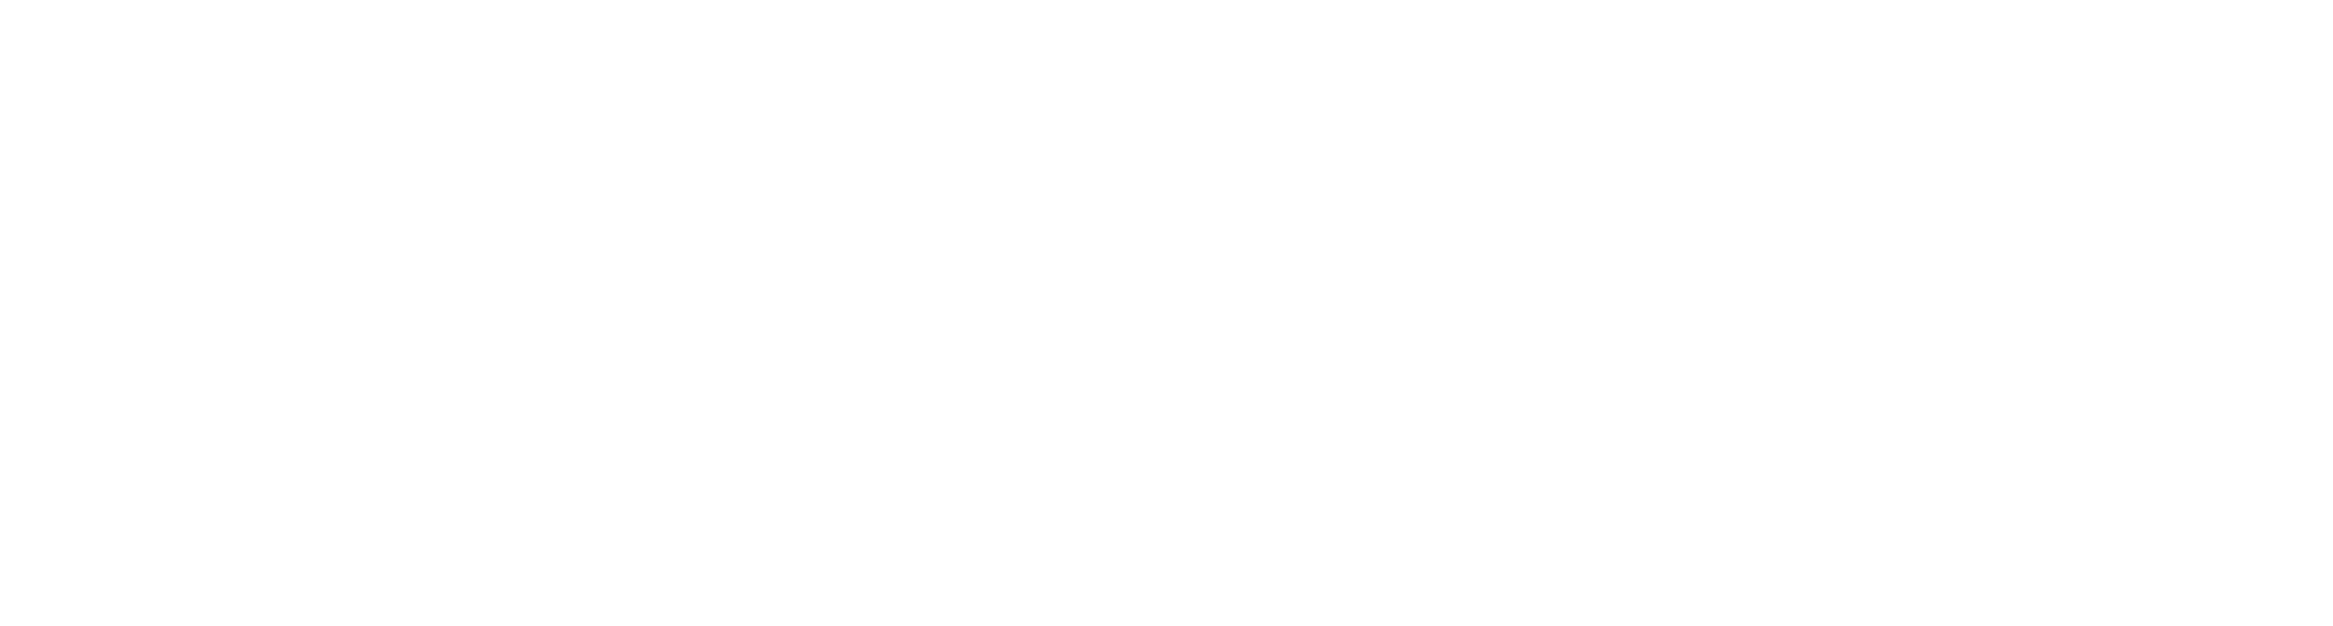 Carle Logo - Home Illinois College of Medicine